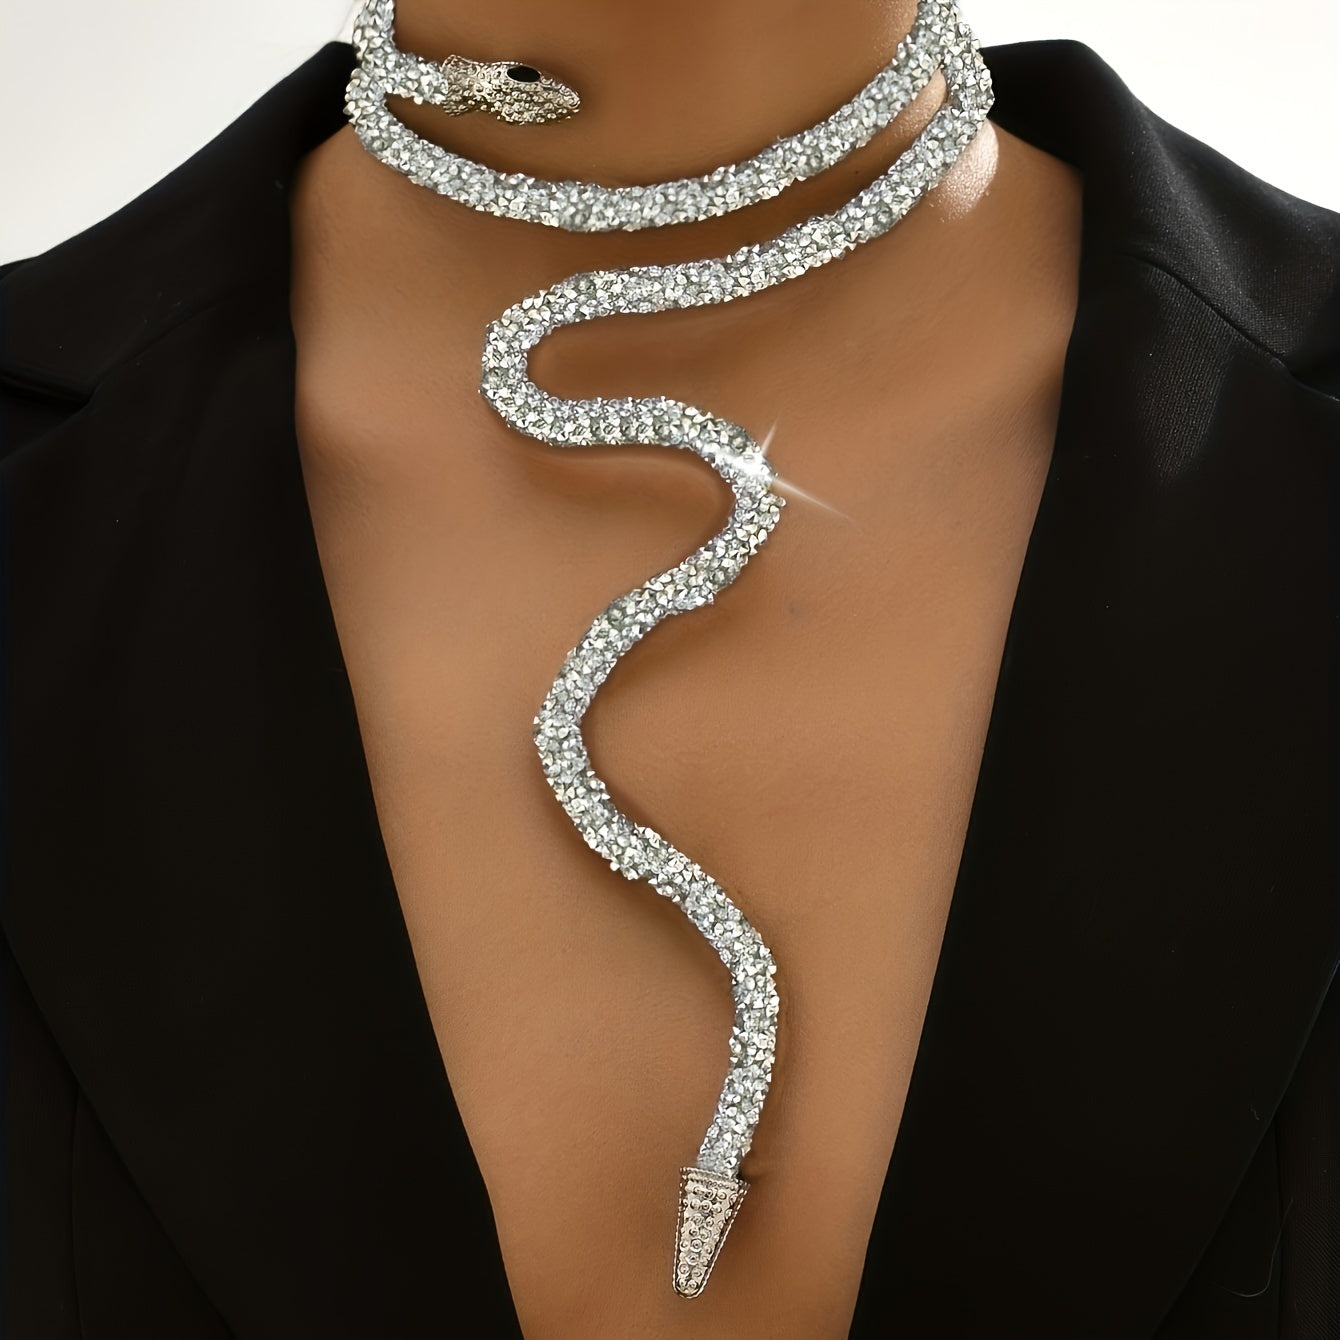 White Color Necklace Random Adjustable Simulation Snake Rhinestone Collar Necklace Punk Gothic Bling Bling Neck Jewelry Decor